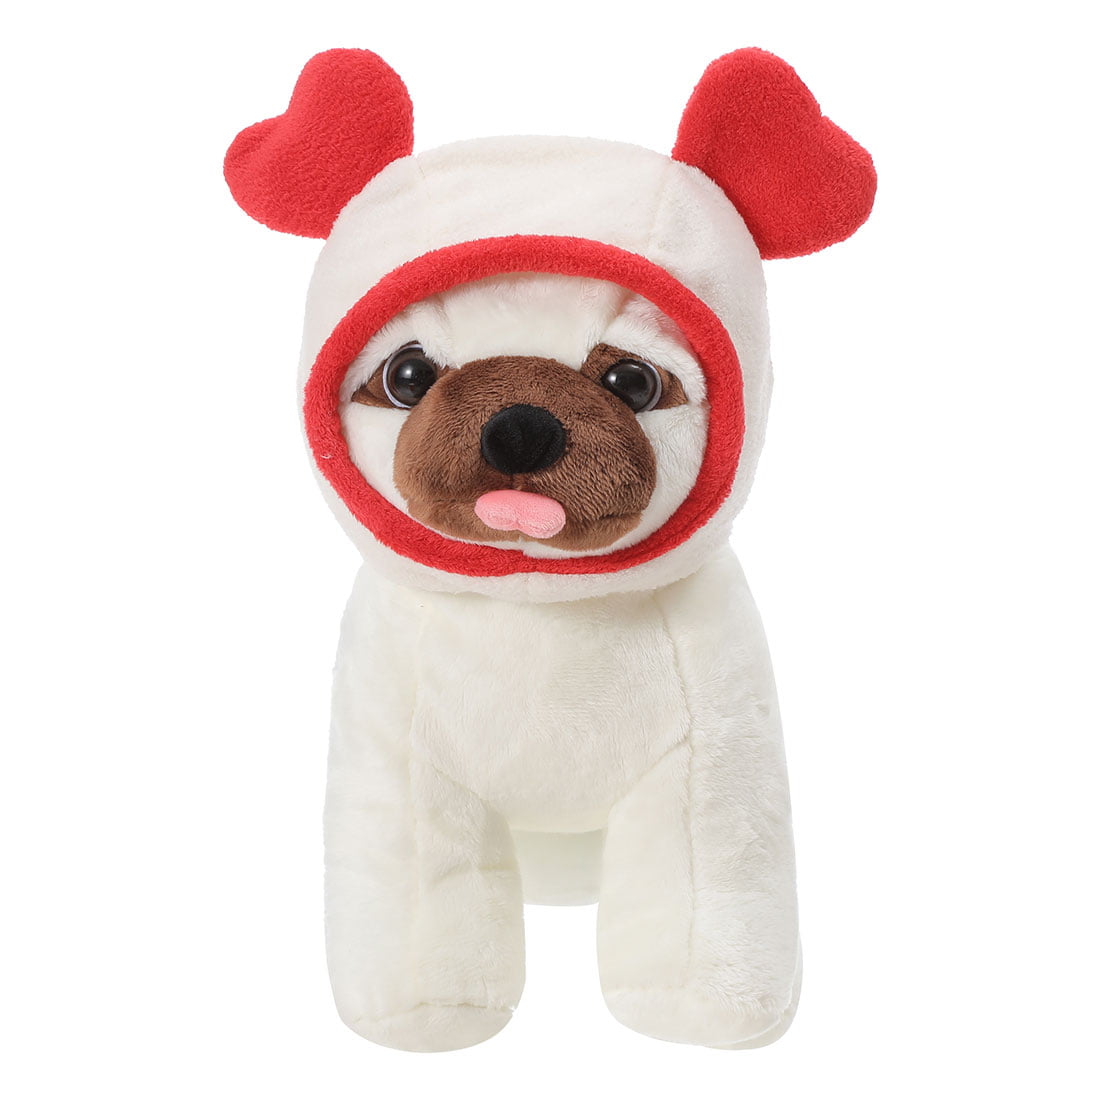  MINISO  Pug Dog Plush  Toy Cute Stuffed Animal Gift for 